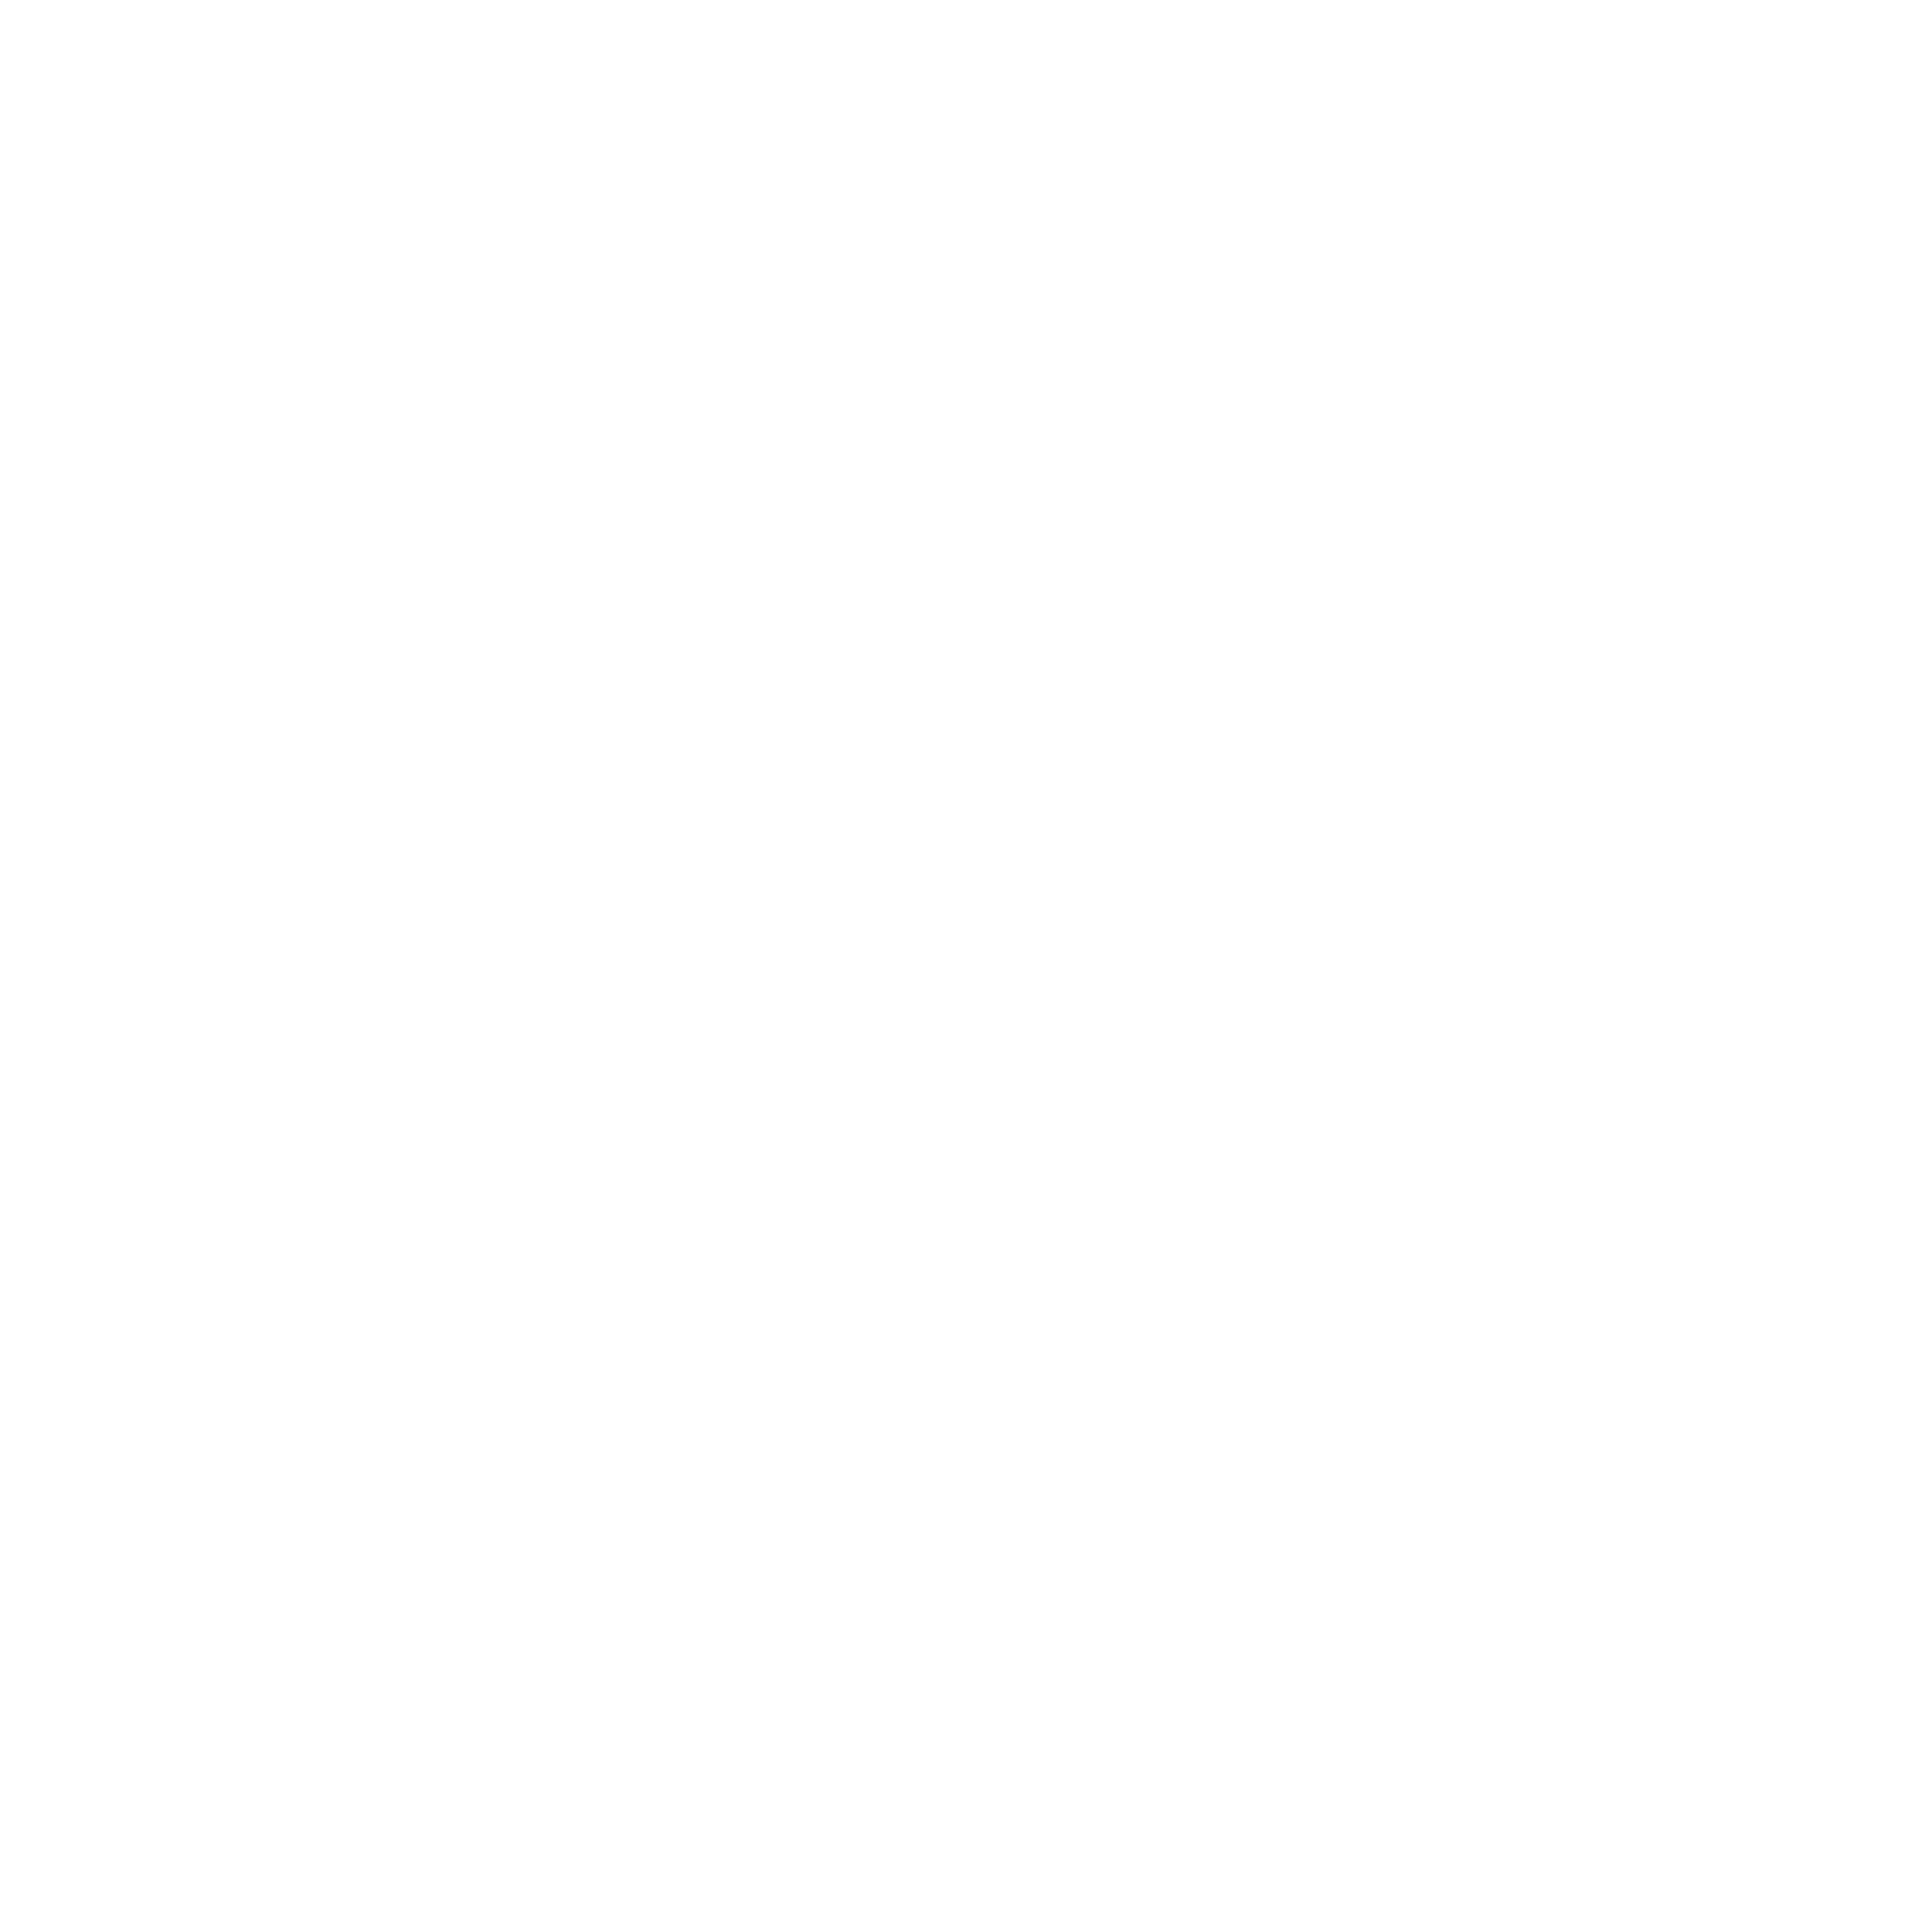 ONE logo